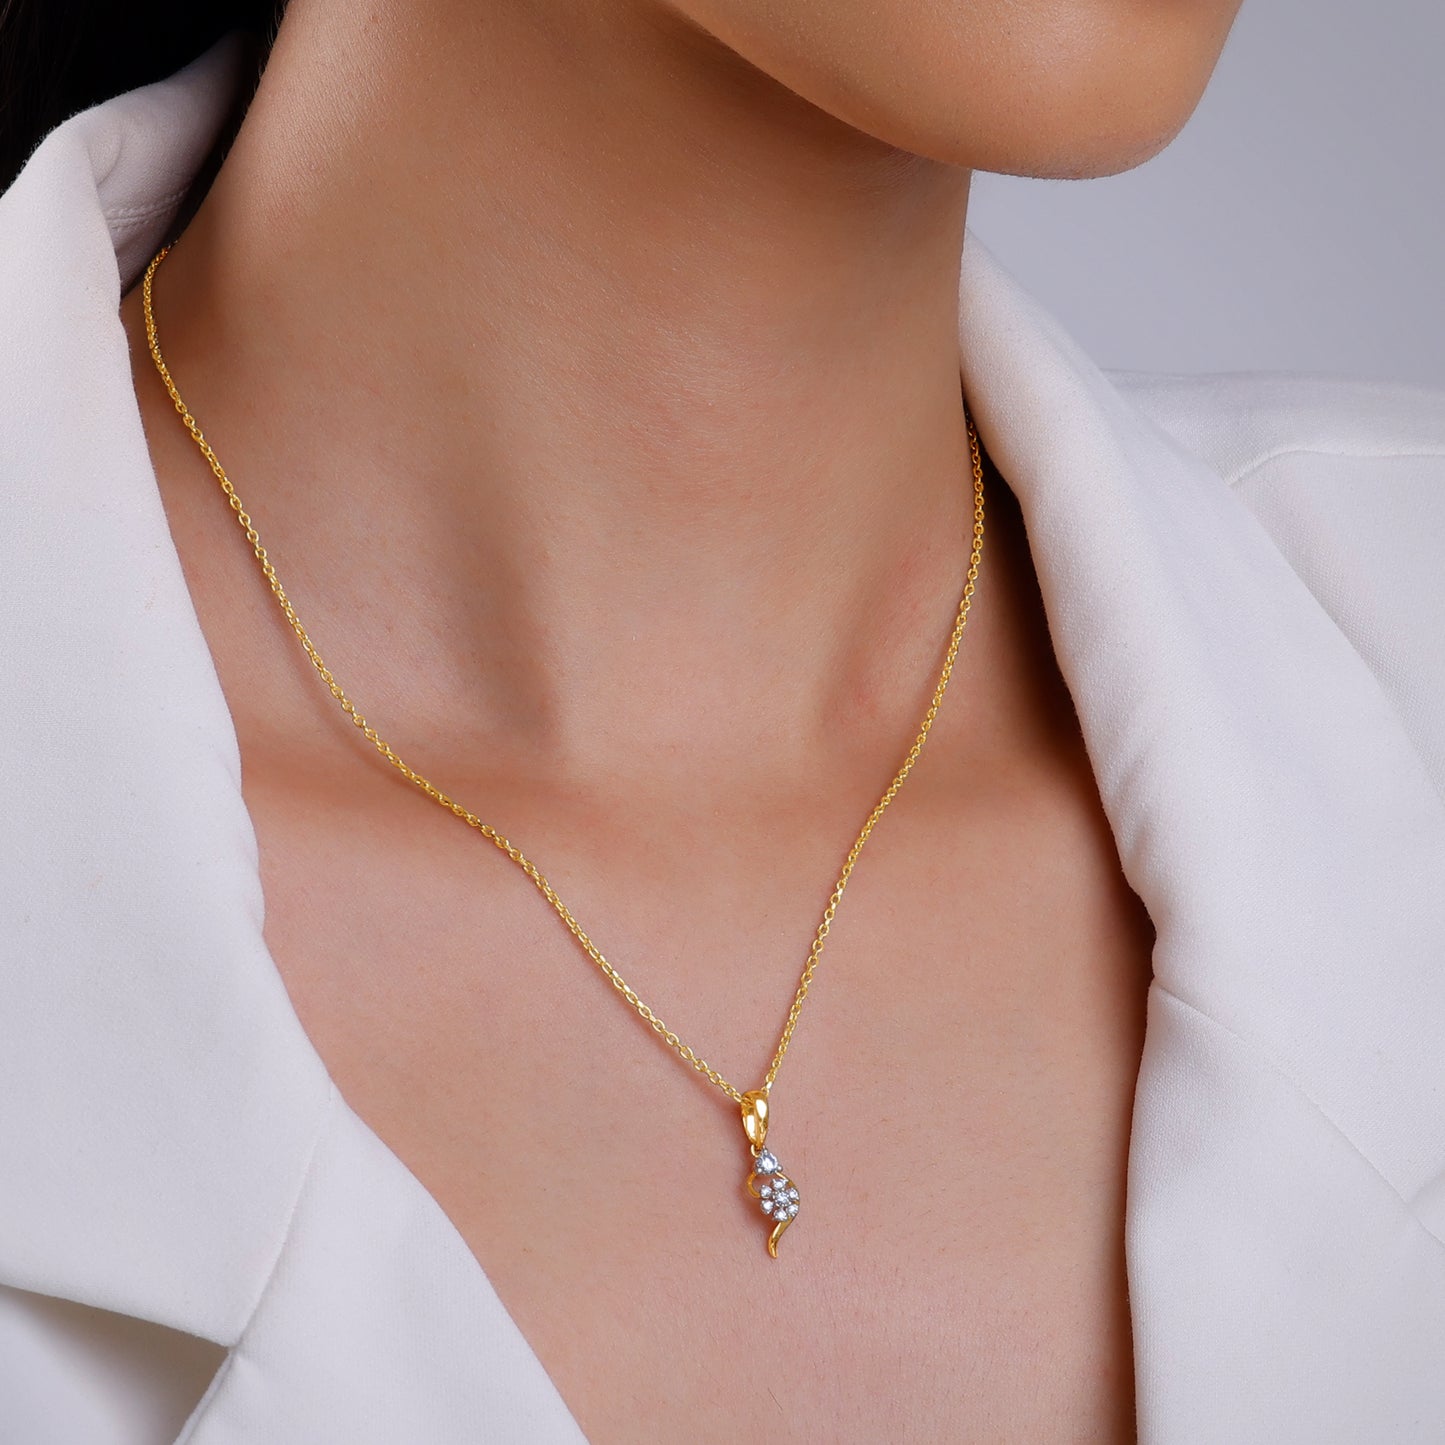 Gold Feathery Elegance Diamond Pendant